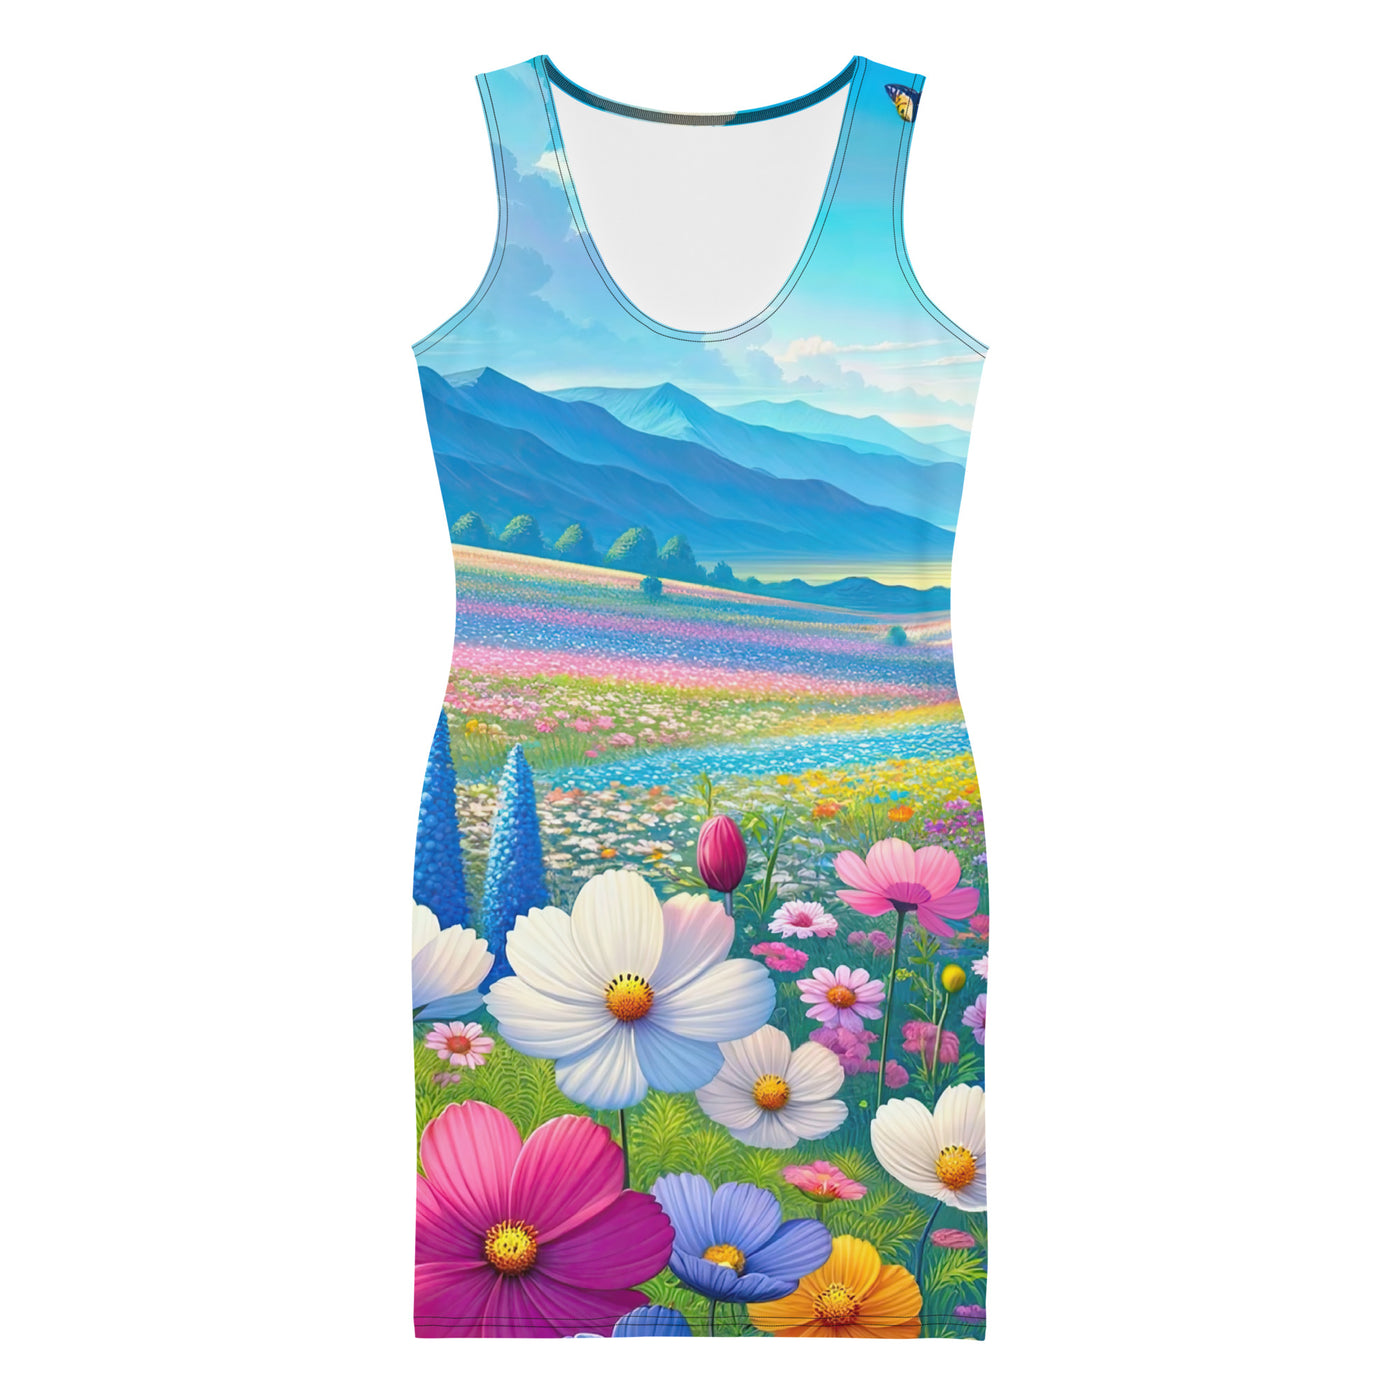 Weitläufiges Blumenfeld unter himmelblauem Himmel, leuchtende Flora - Langes Damen Kleid (All-Over Print) camping xxx yyy zzz XL